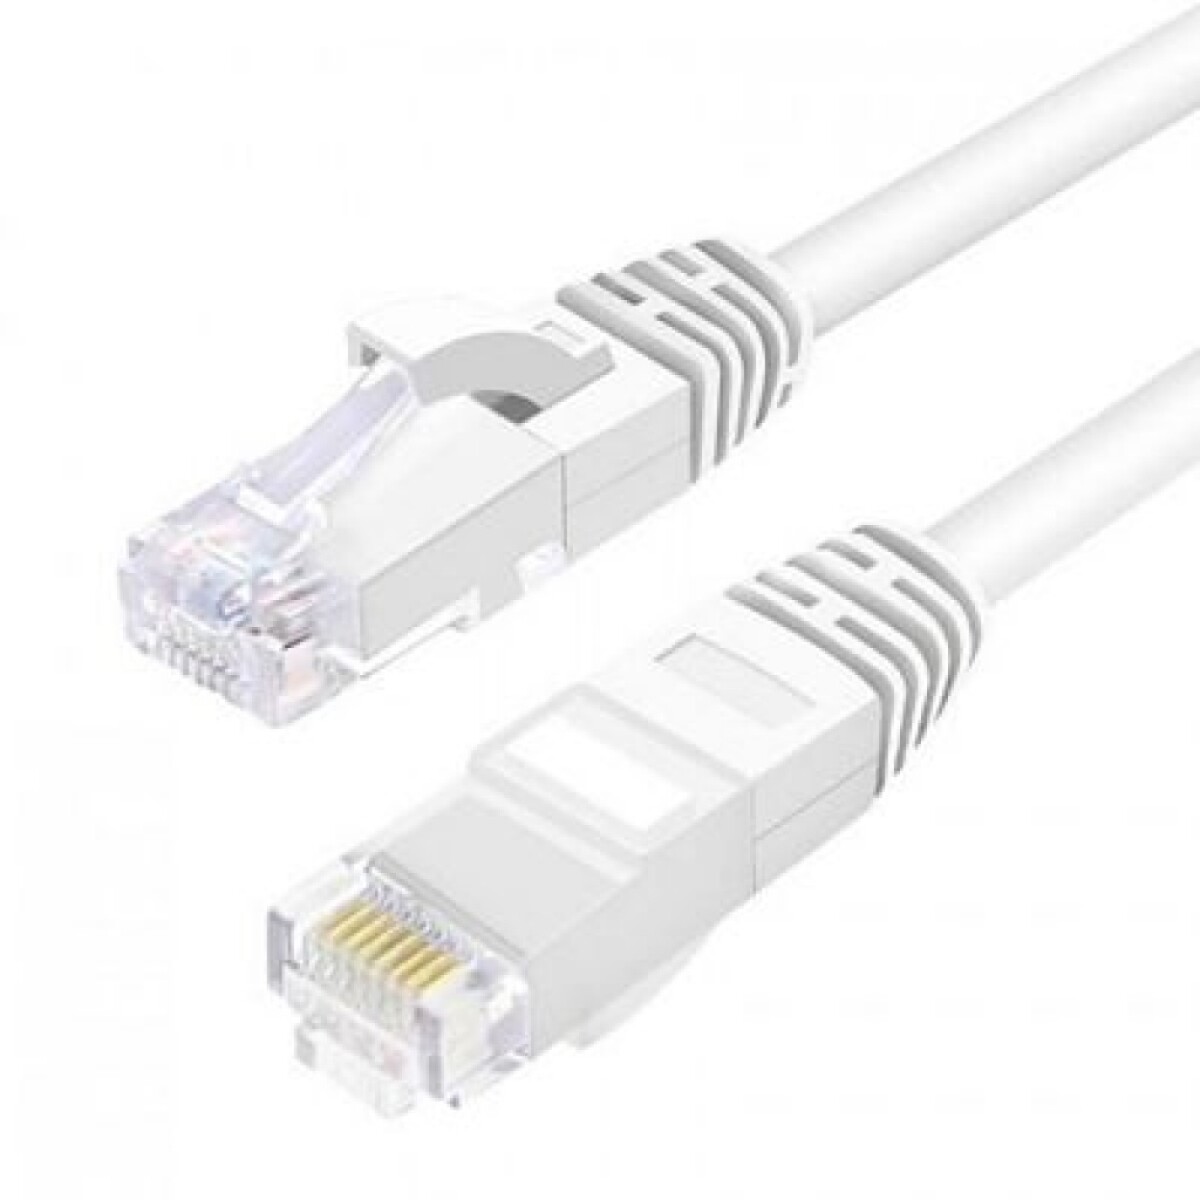 Cable de red LAN Categoria 5e - 1.5 metros de largo 